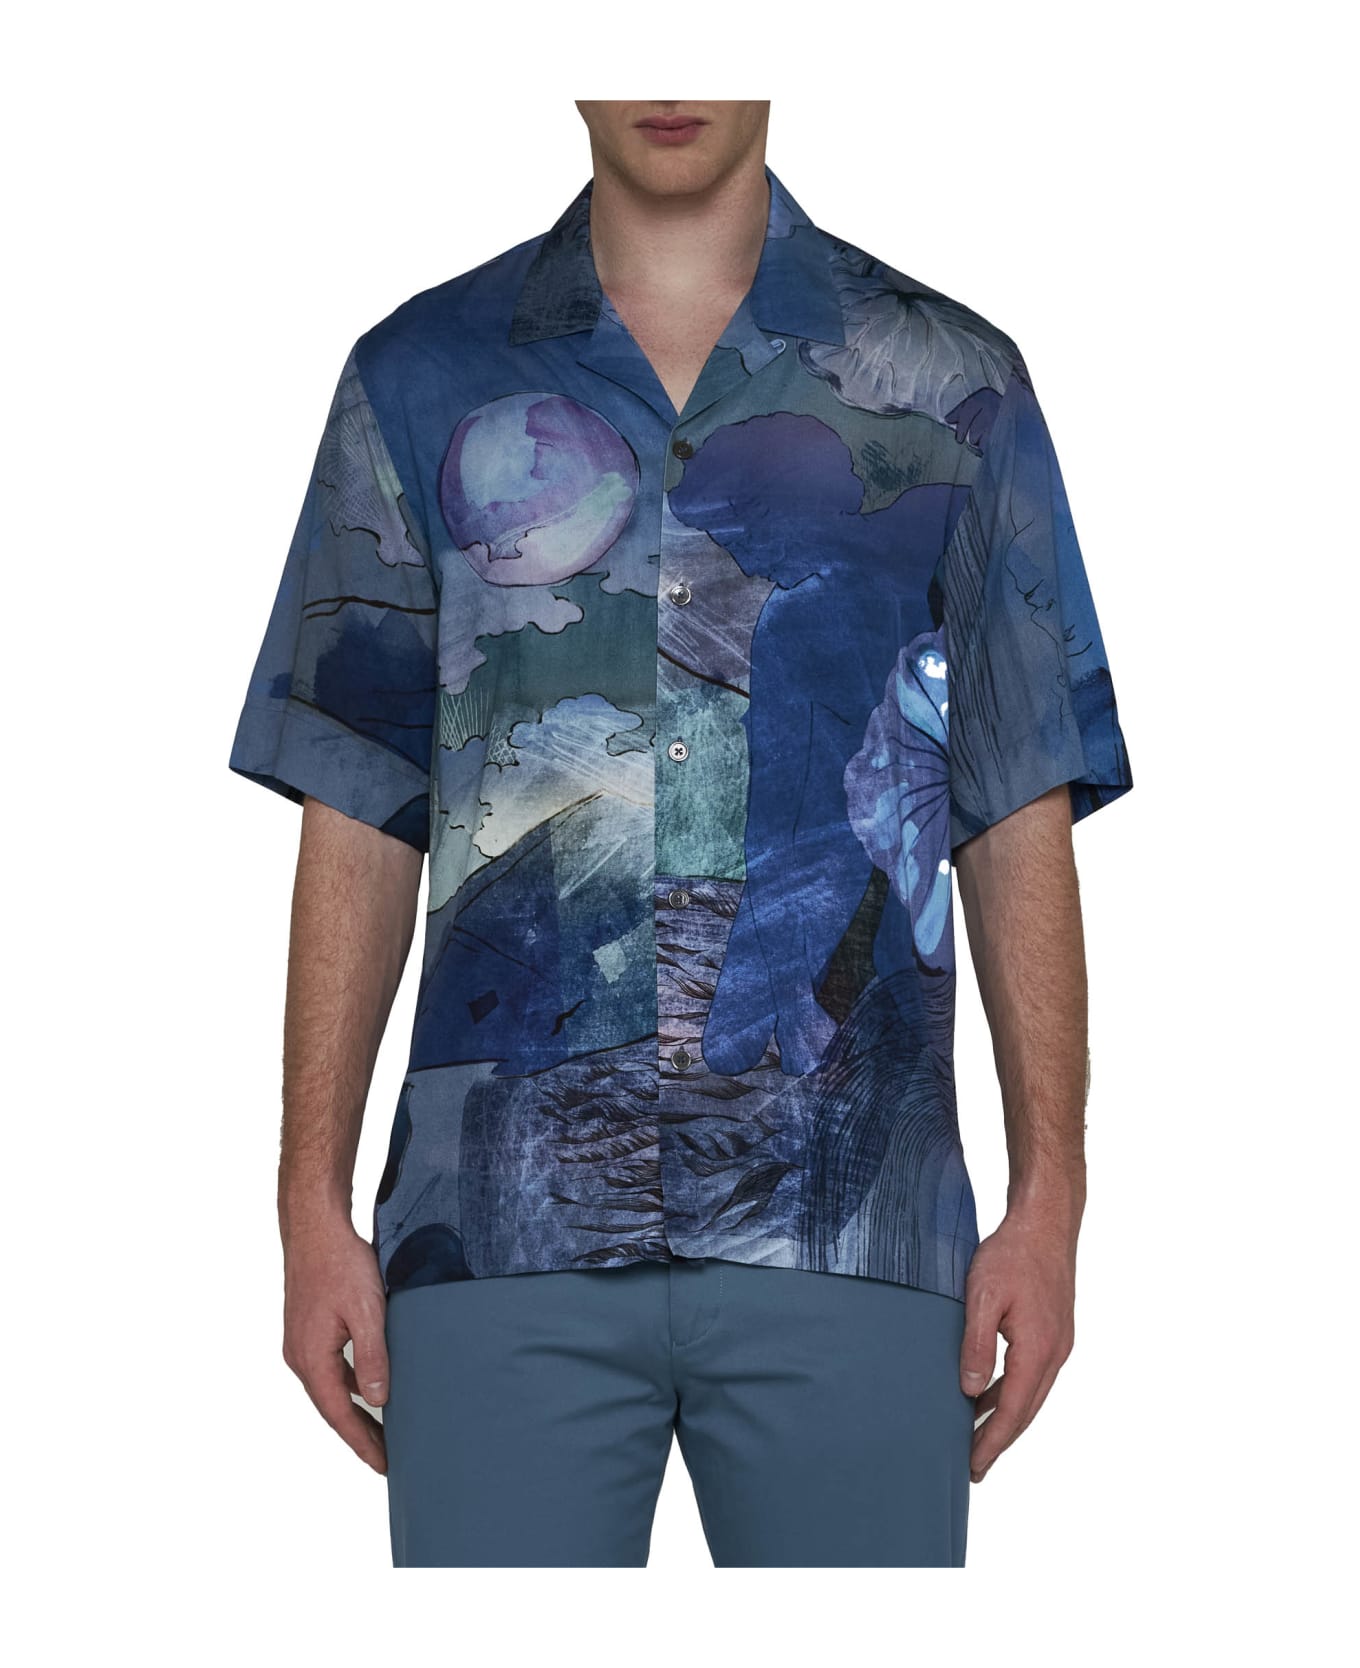 Paul Smith Shirt - Navy